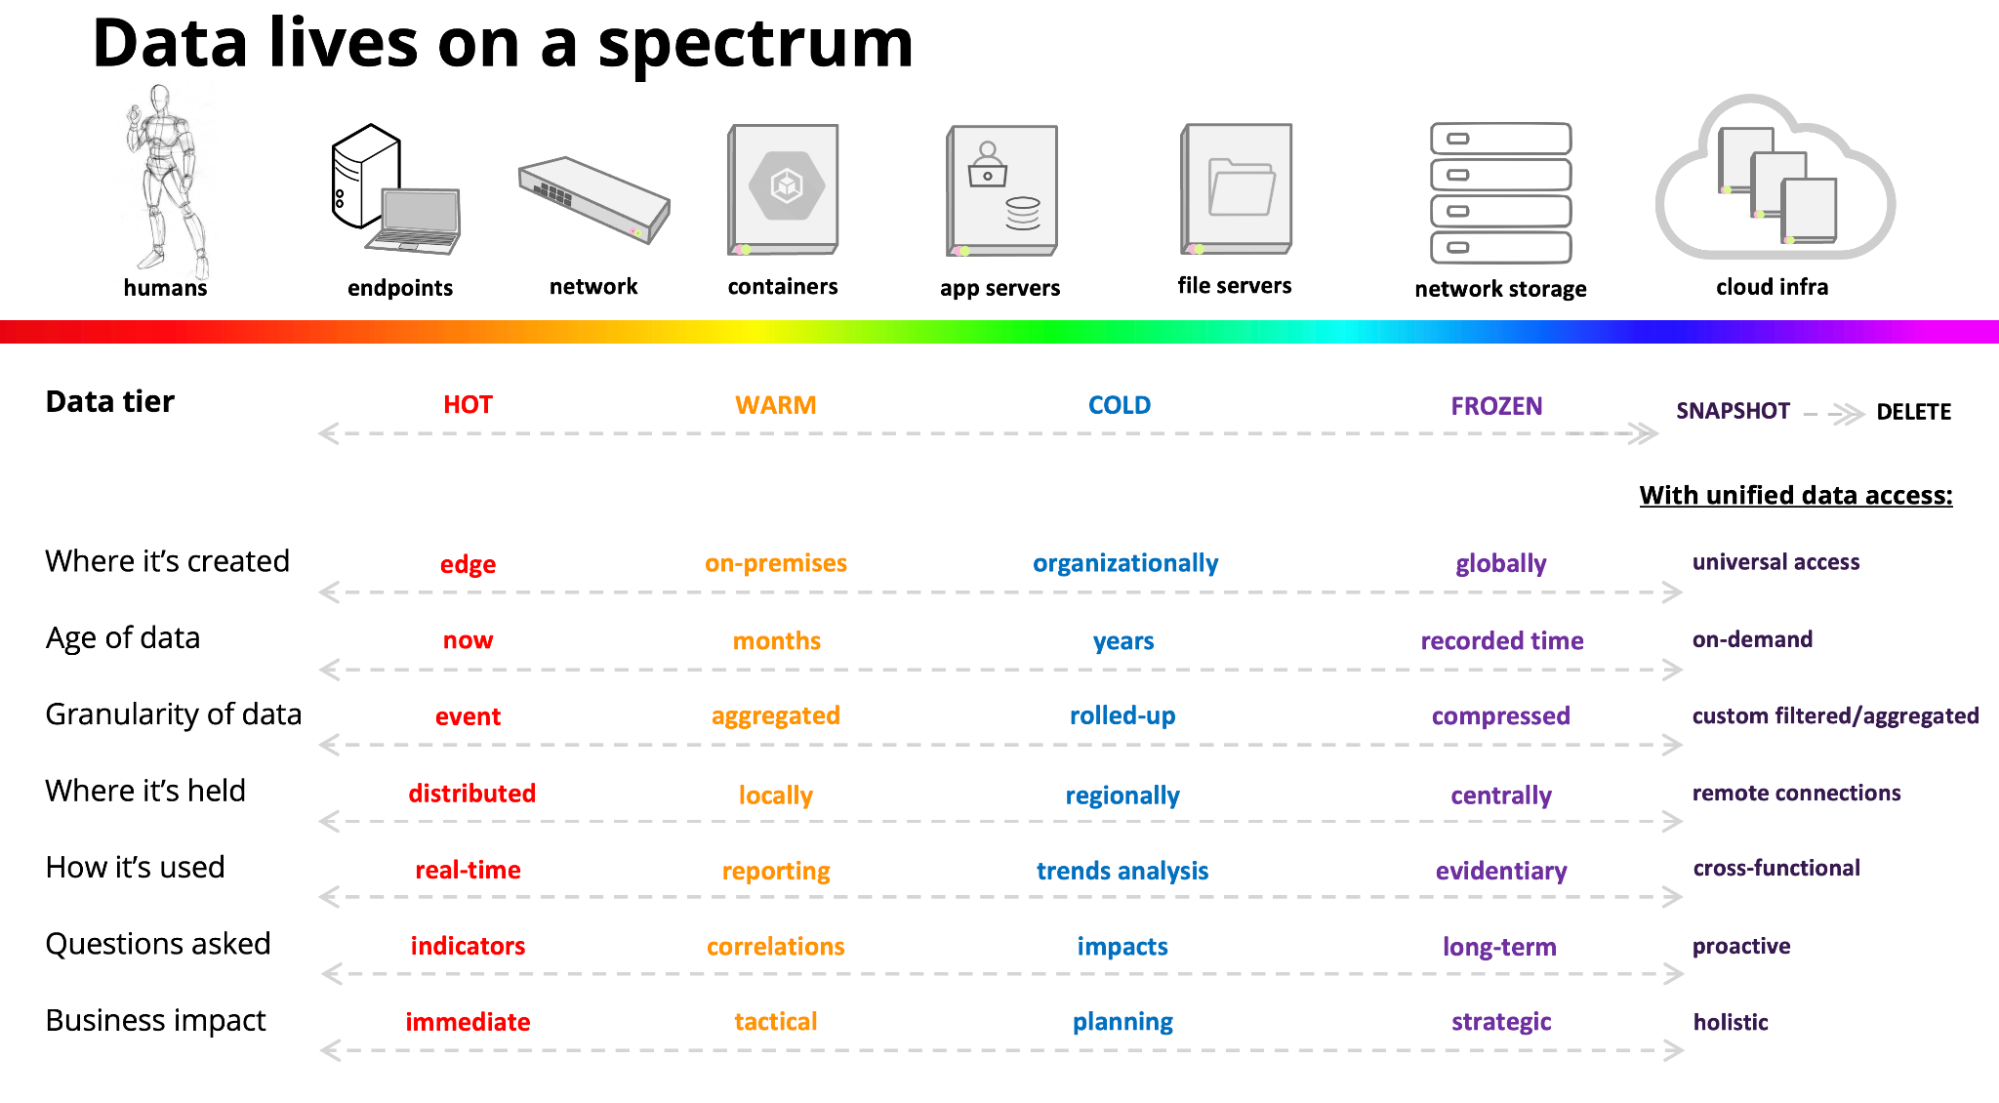 data lives on a spectrum